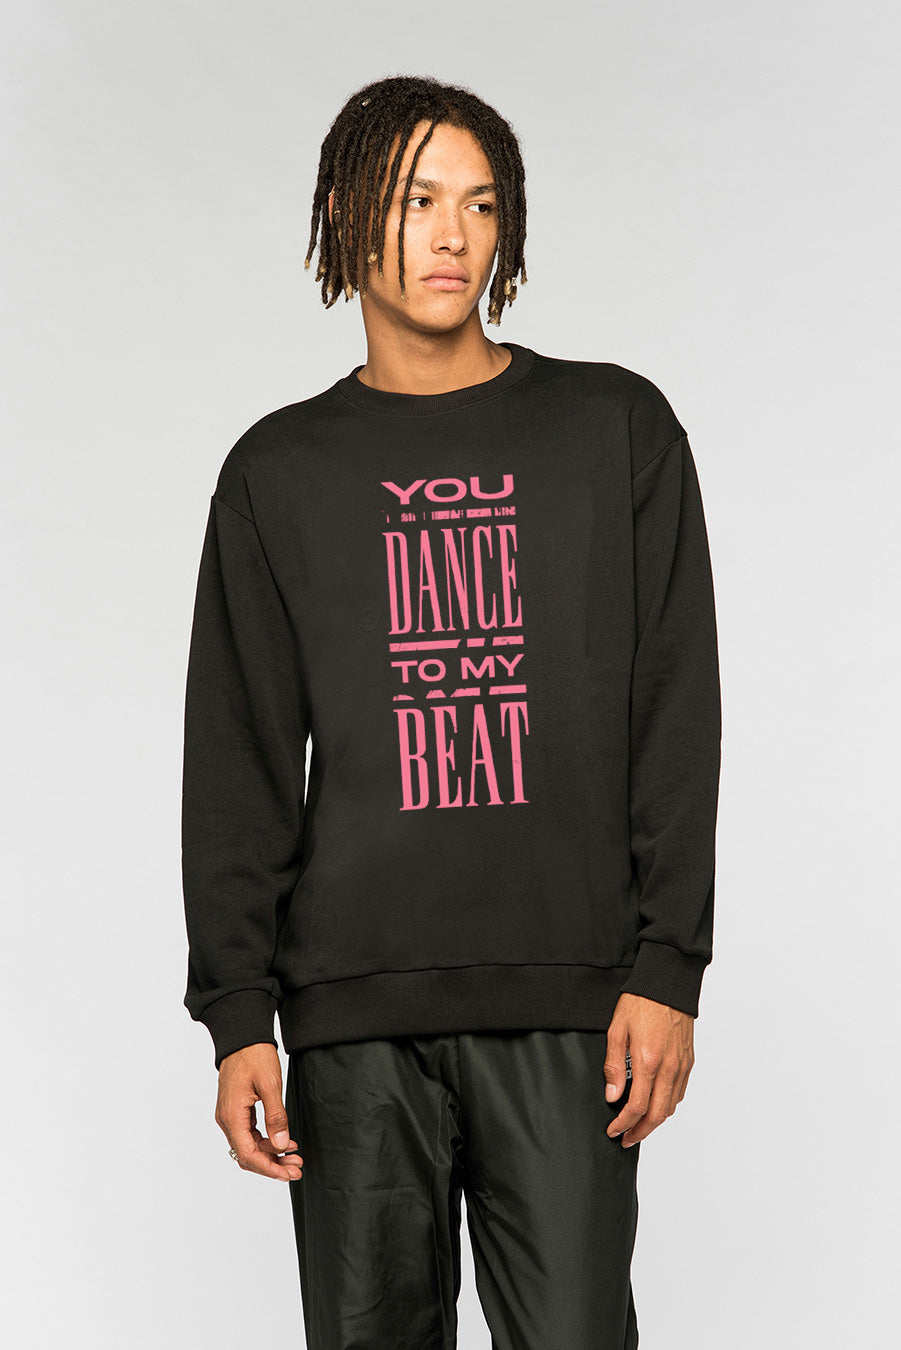 YOU DANCE TO MY BEAT Sweatshirt